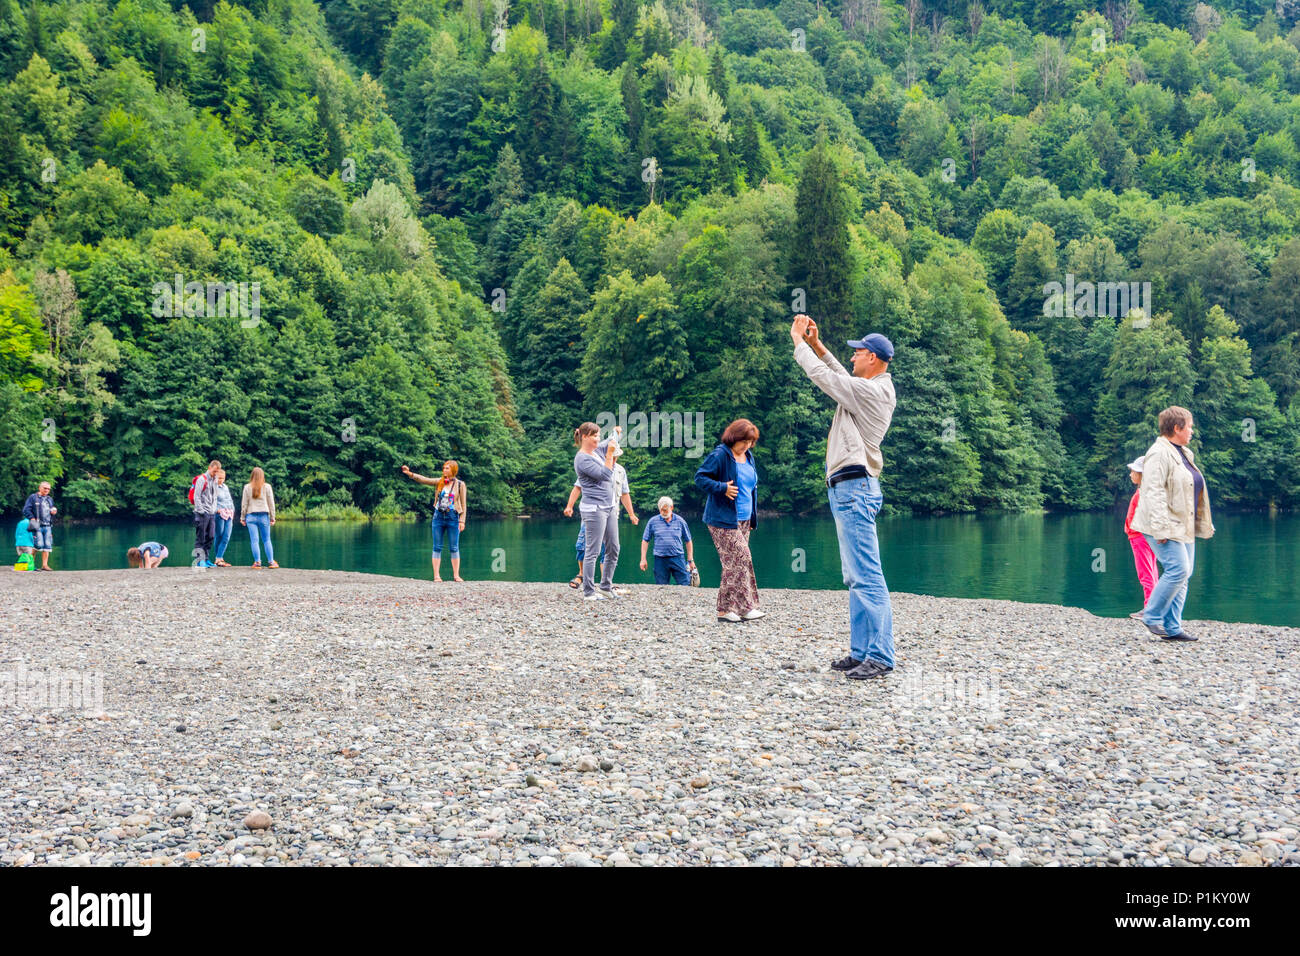 Lake Ritsa, Abkhazia/Georgia - Aug 31, 2017: Group of people taking photos and selfies at scenic lake Ritsa Stock Photo